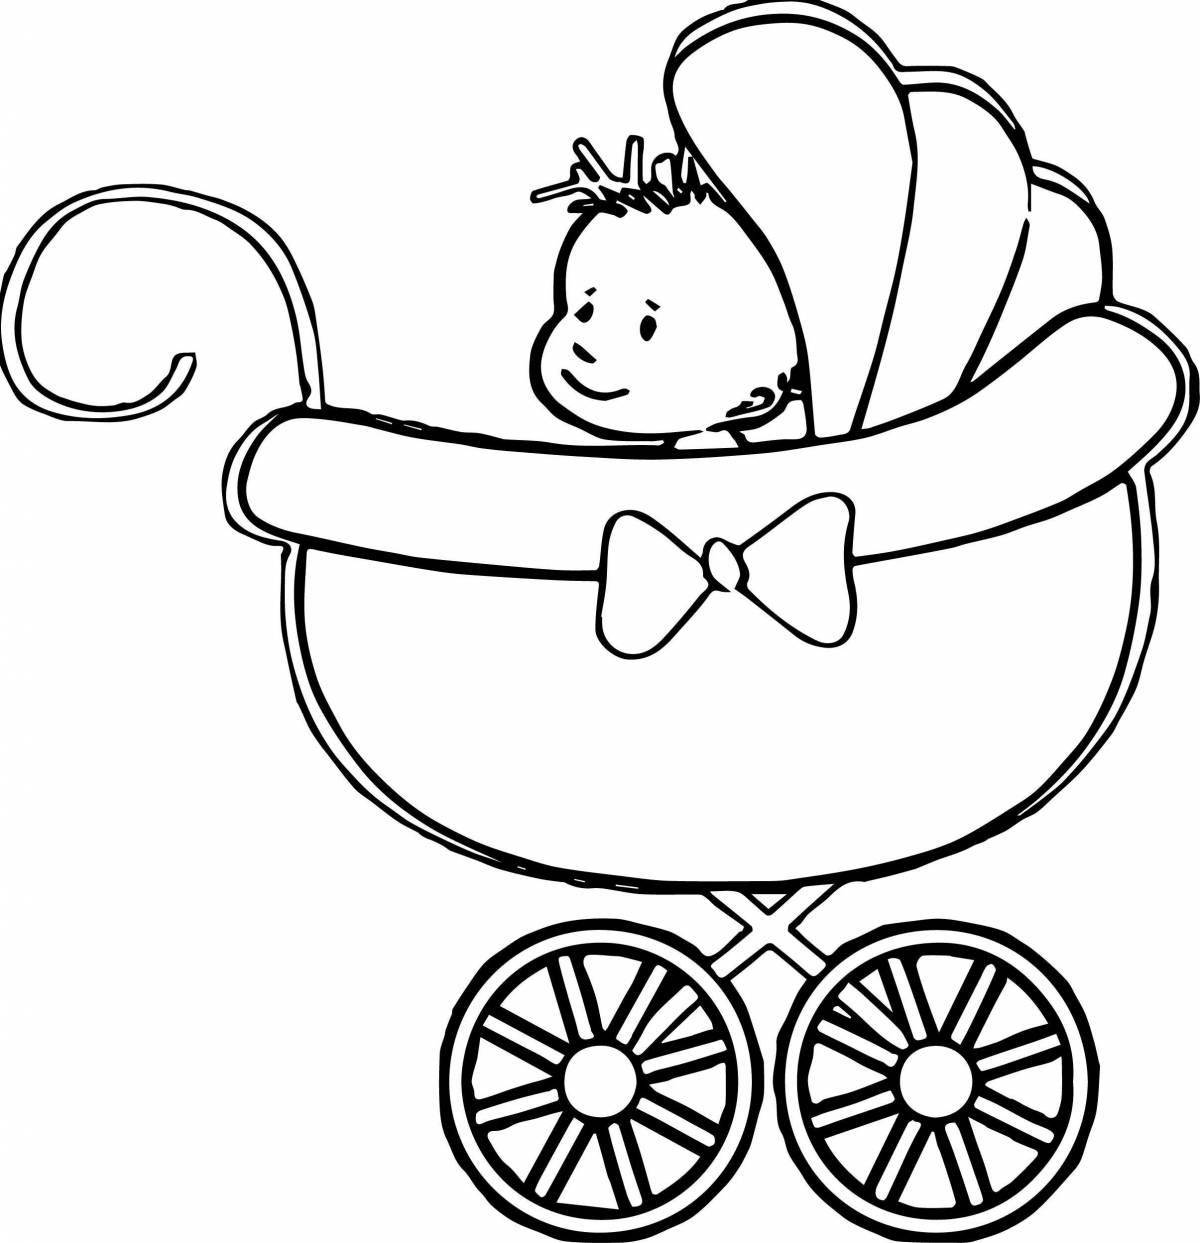 Radiant coloring page малыш в коляске